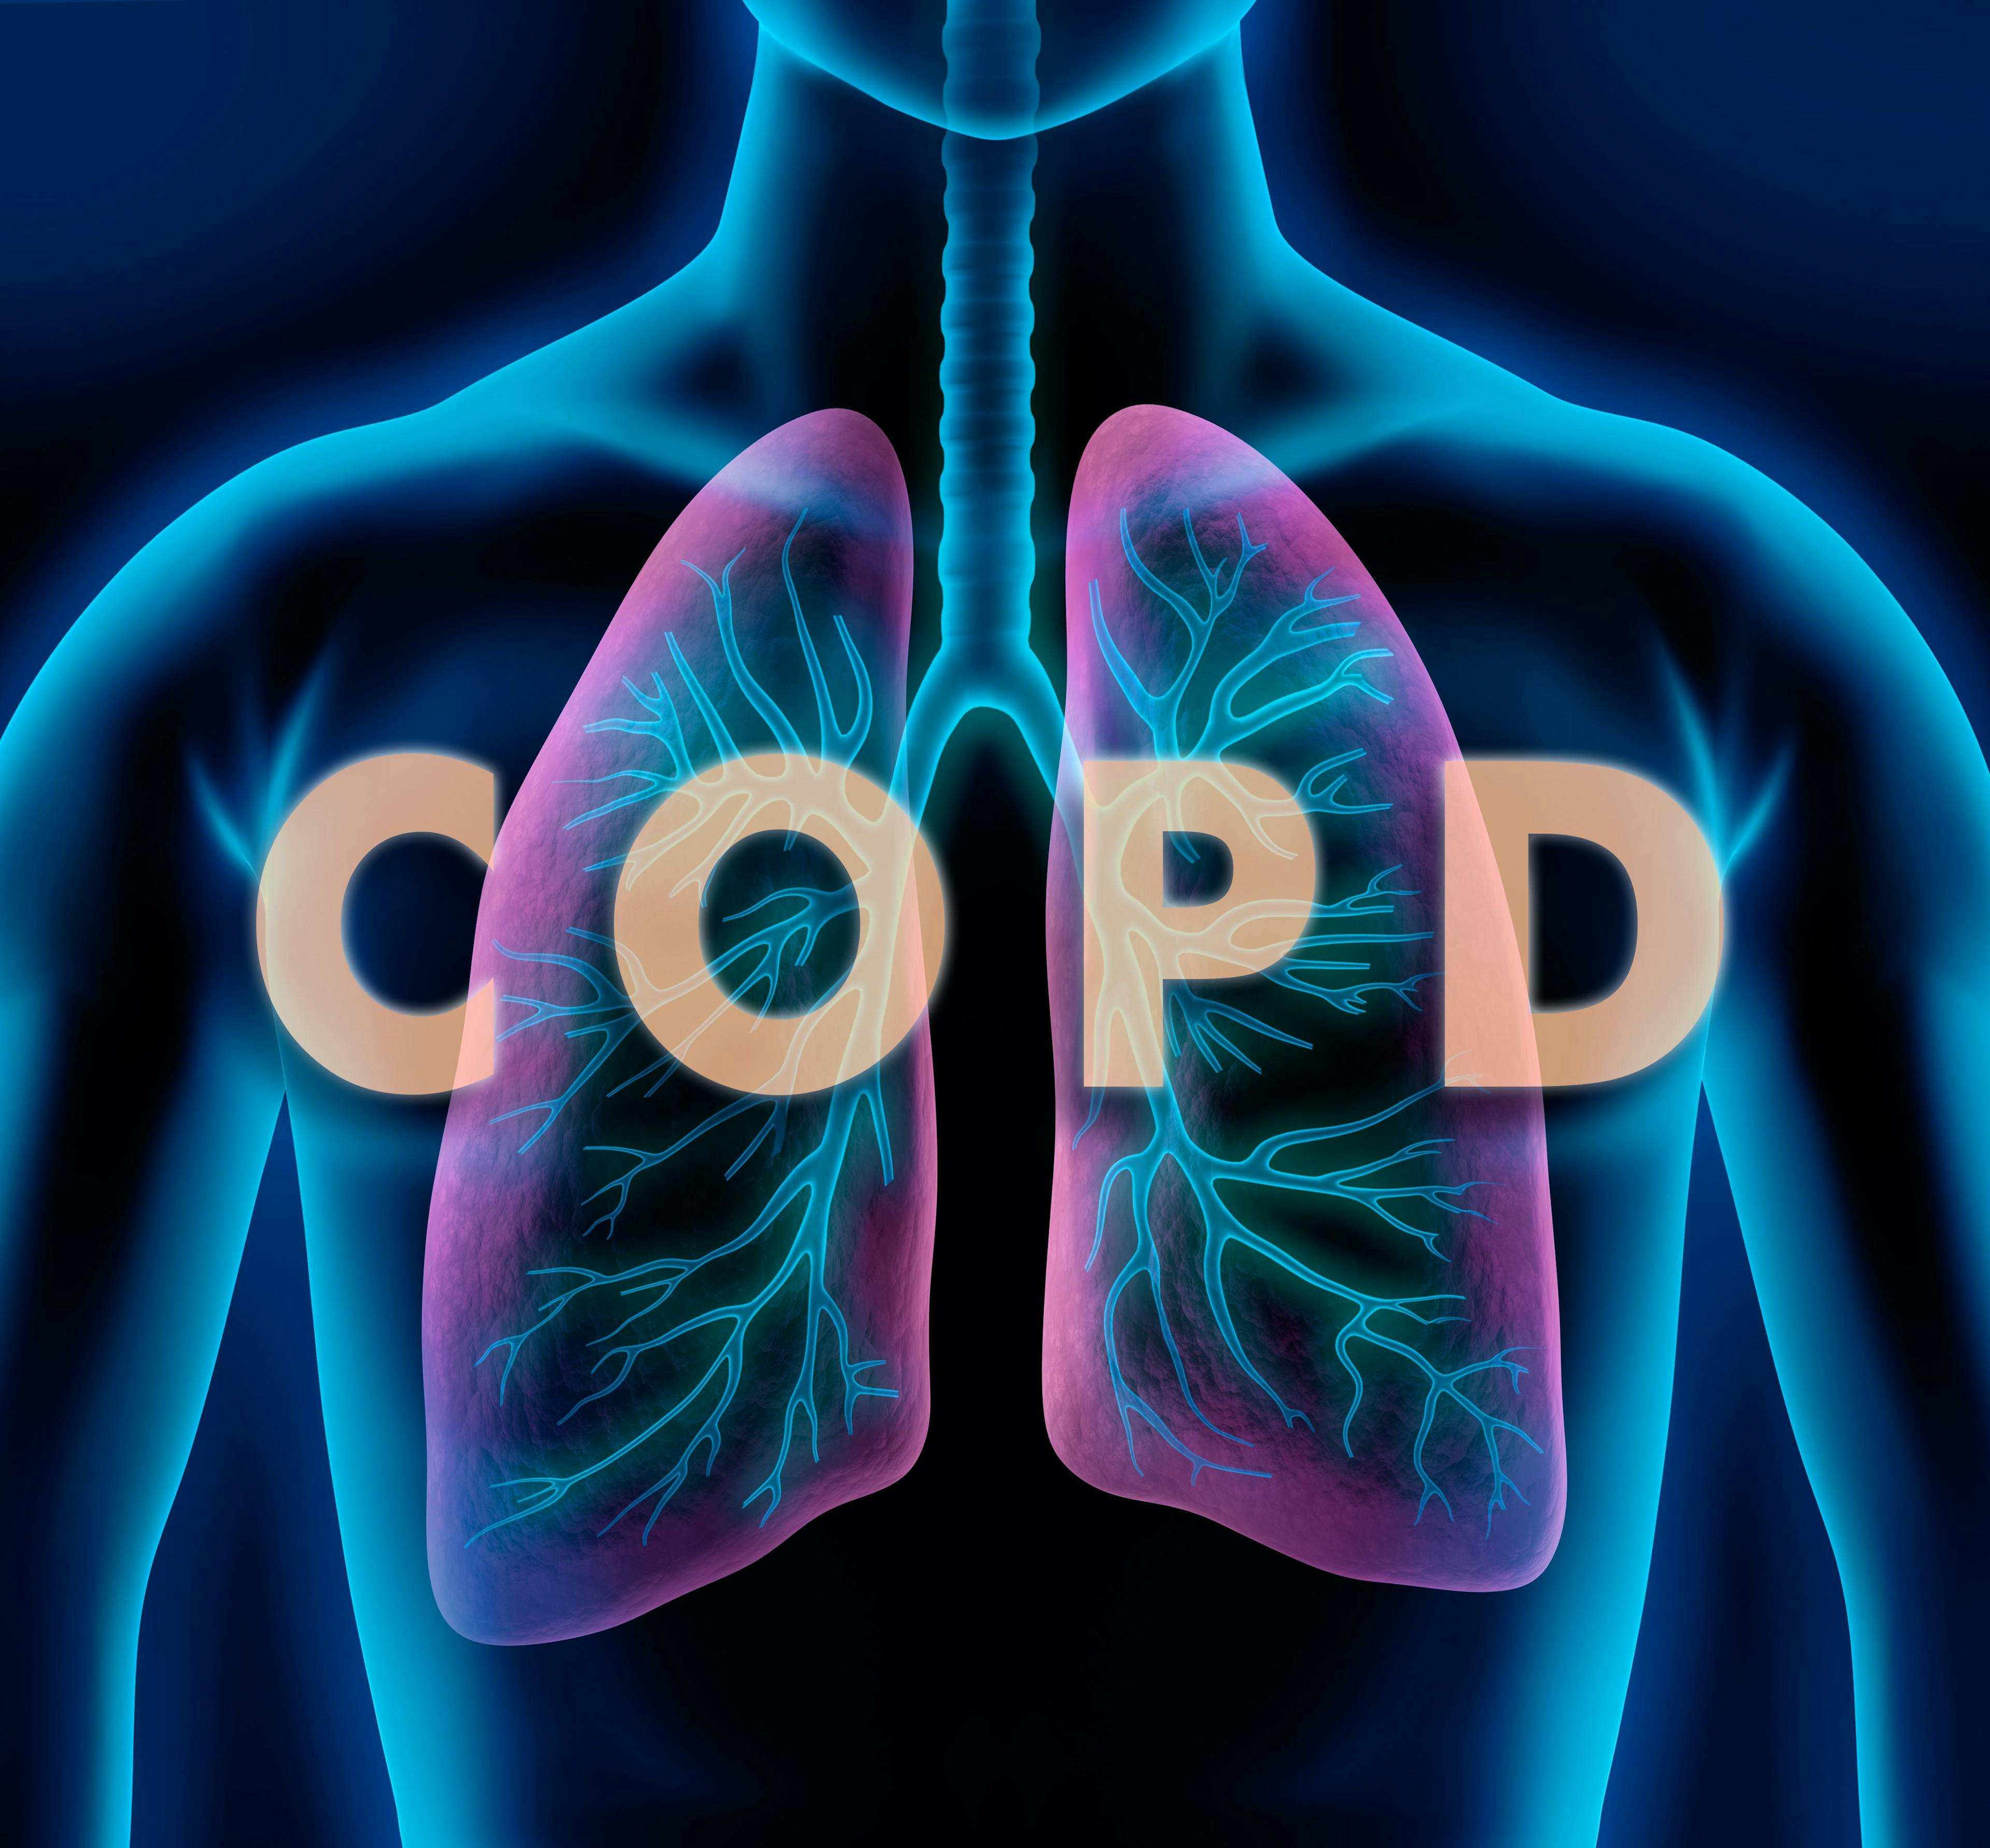 COPD cartoon | Image credit: peterschreiber.media - stock.adobe.com